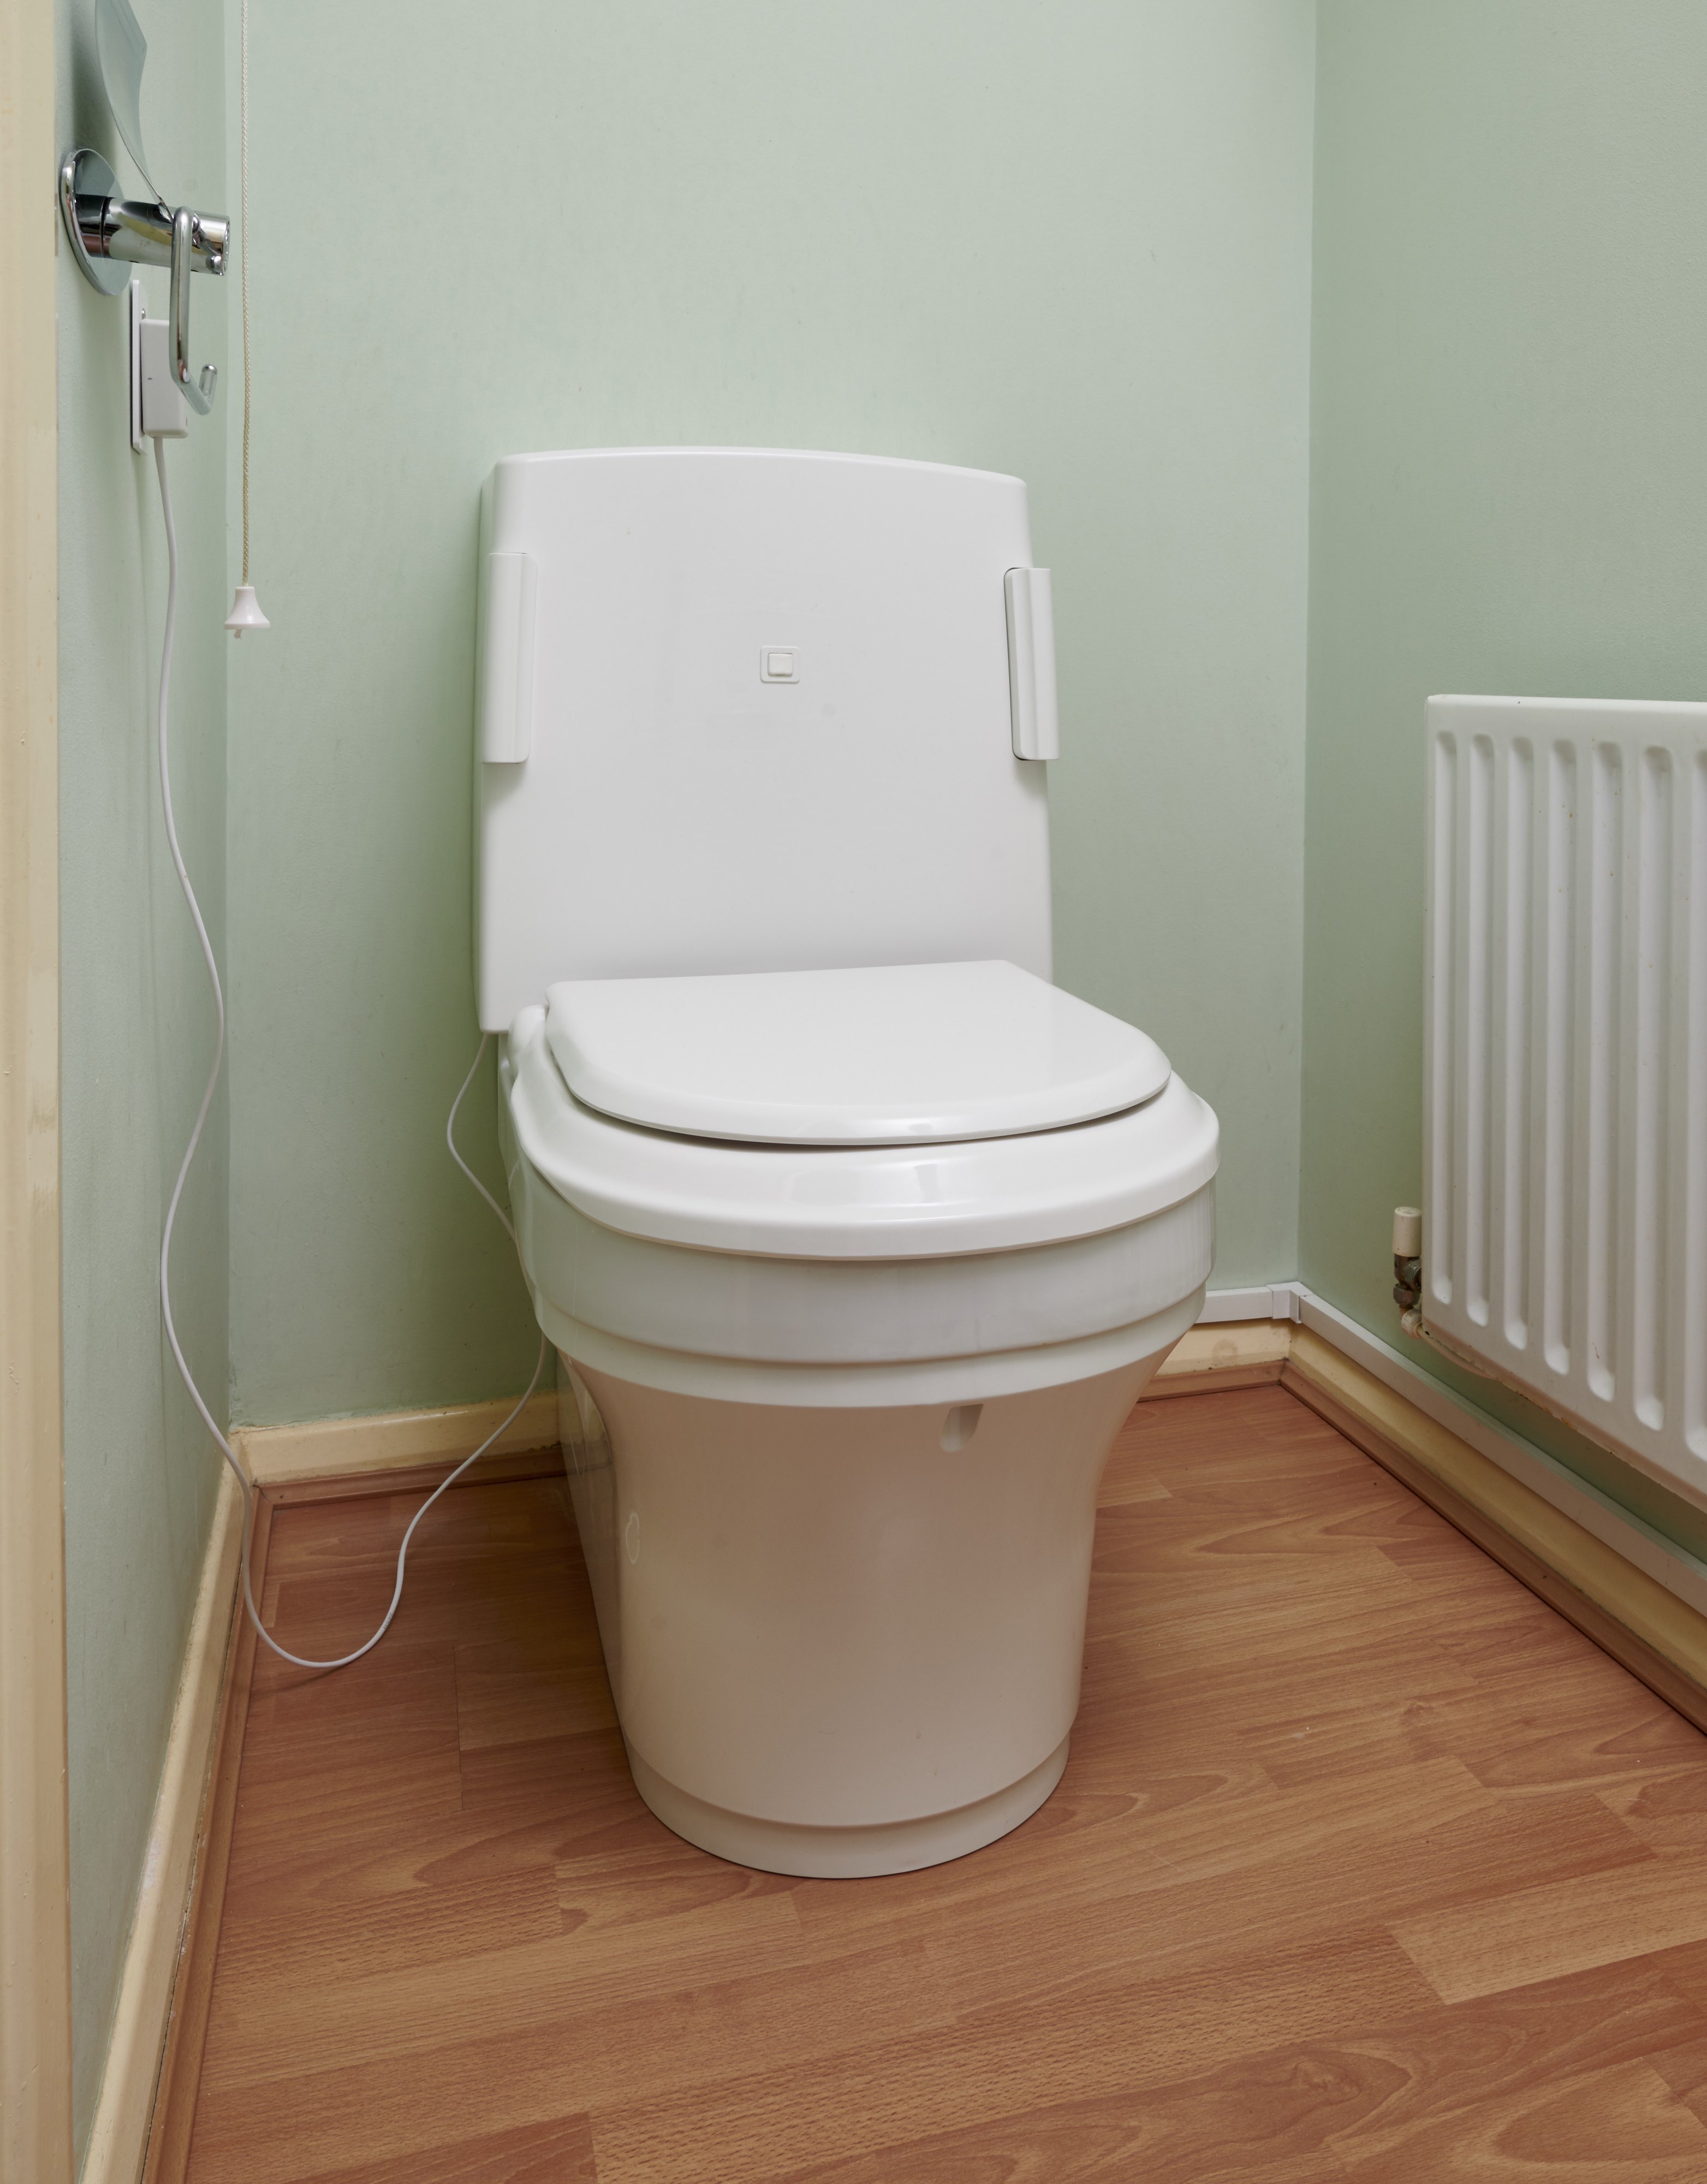 A Closomat accessible toilet